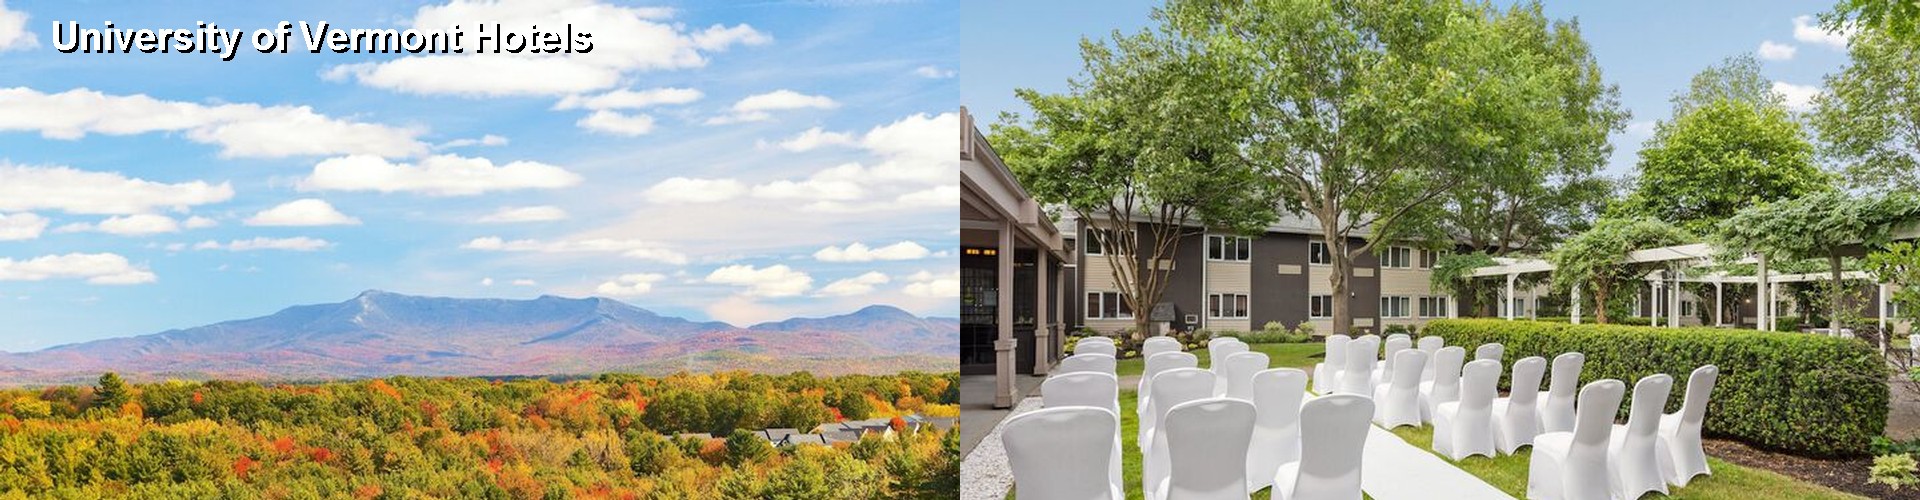 5 Best Hotels near University of Vermont